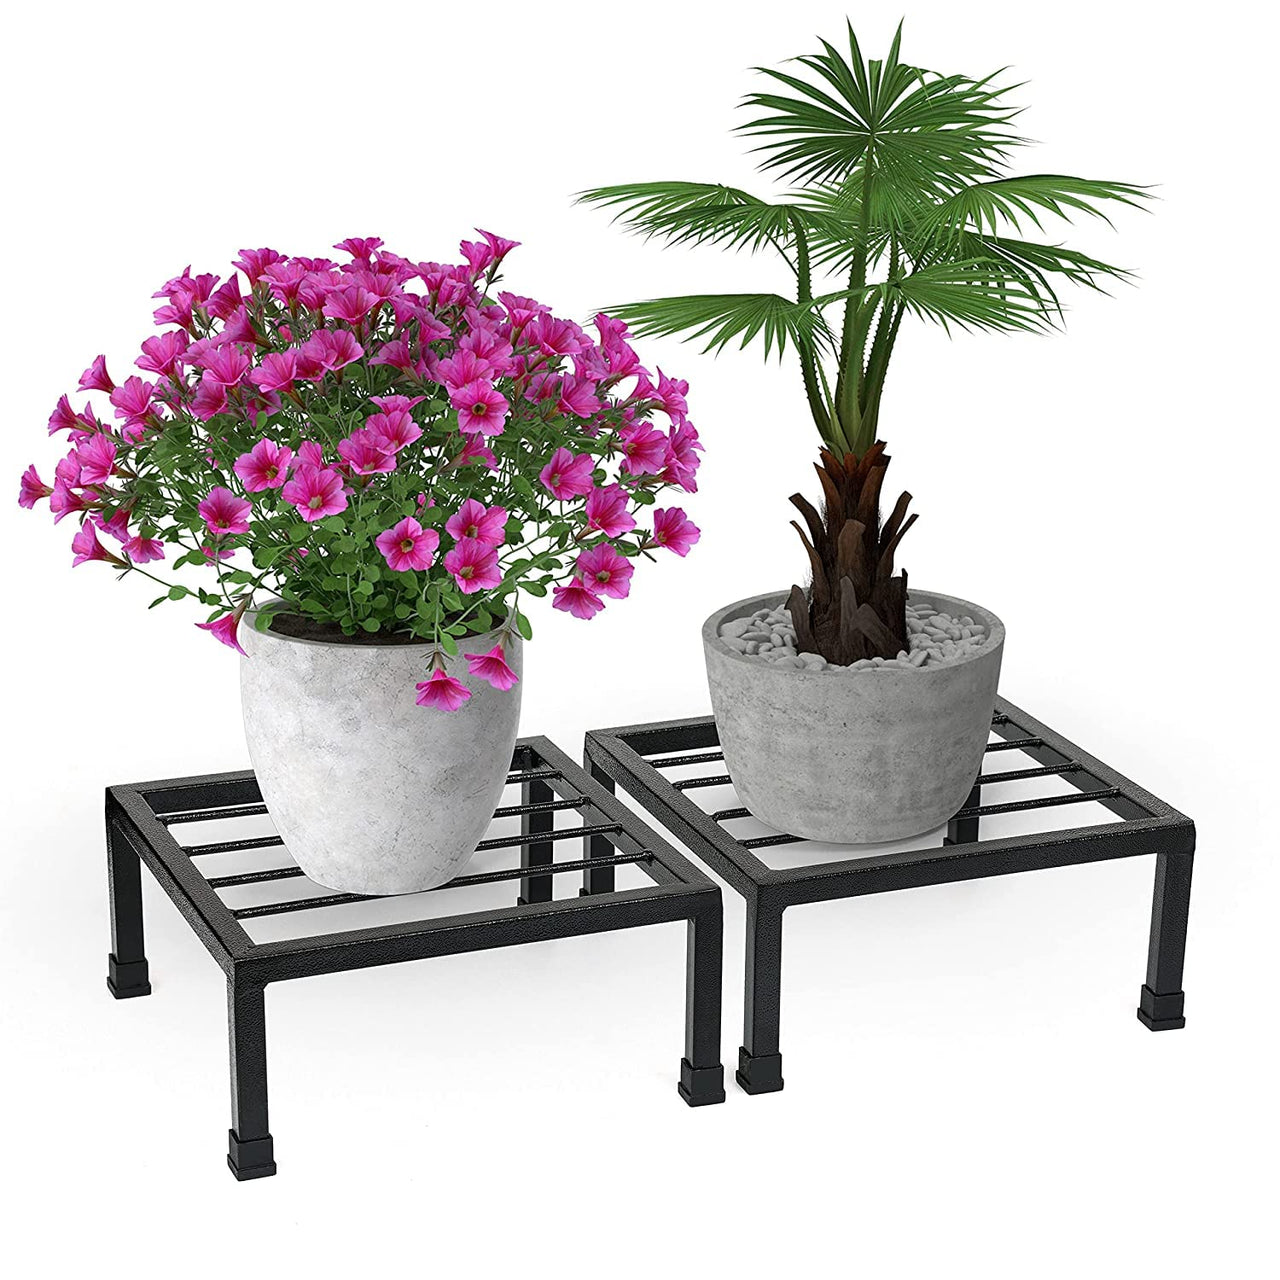 Flower Pot Stand - Outdoor Indoor Garden Metal Potted Plant Pot Holder – Balcony Display Planter Shelf Rack Dime Store